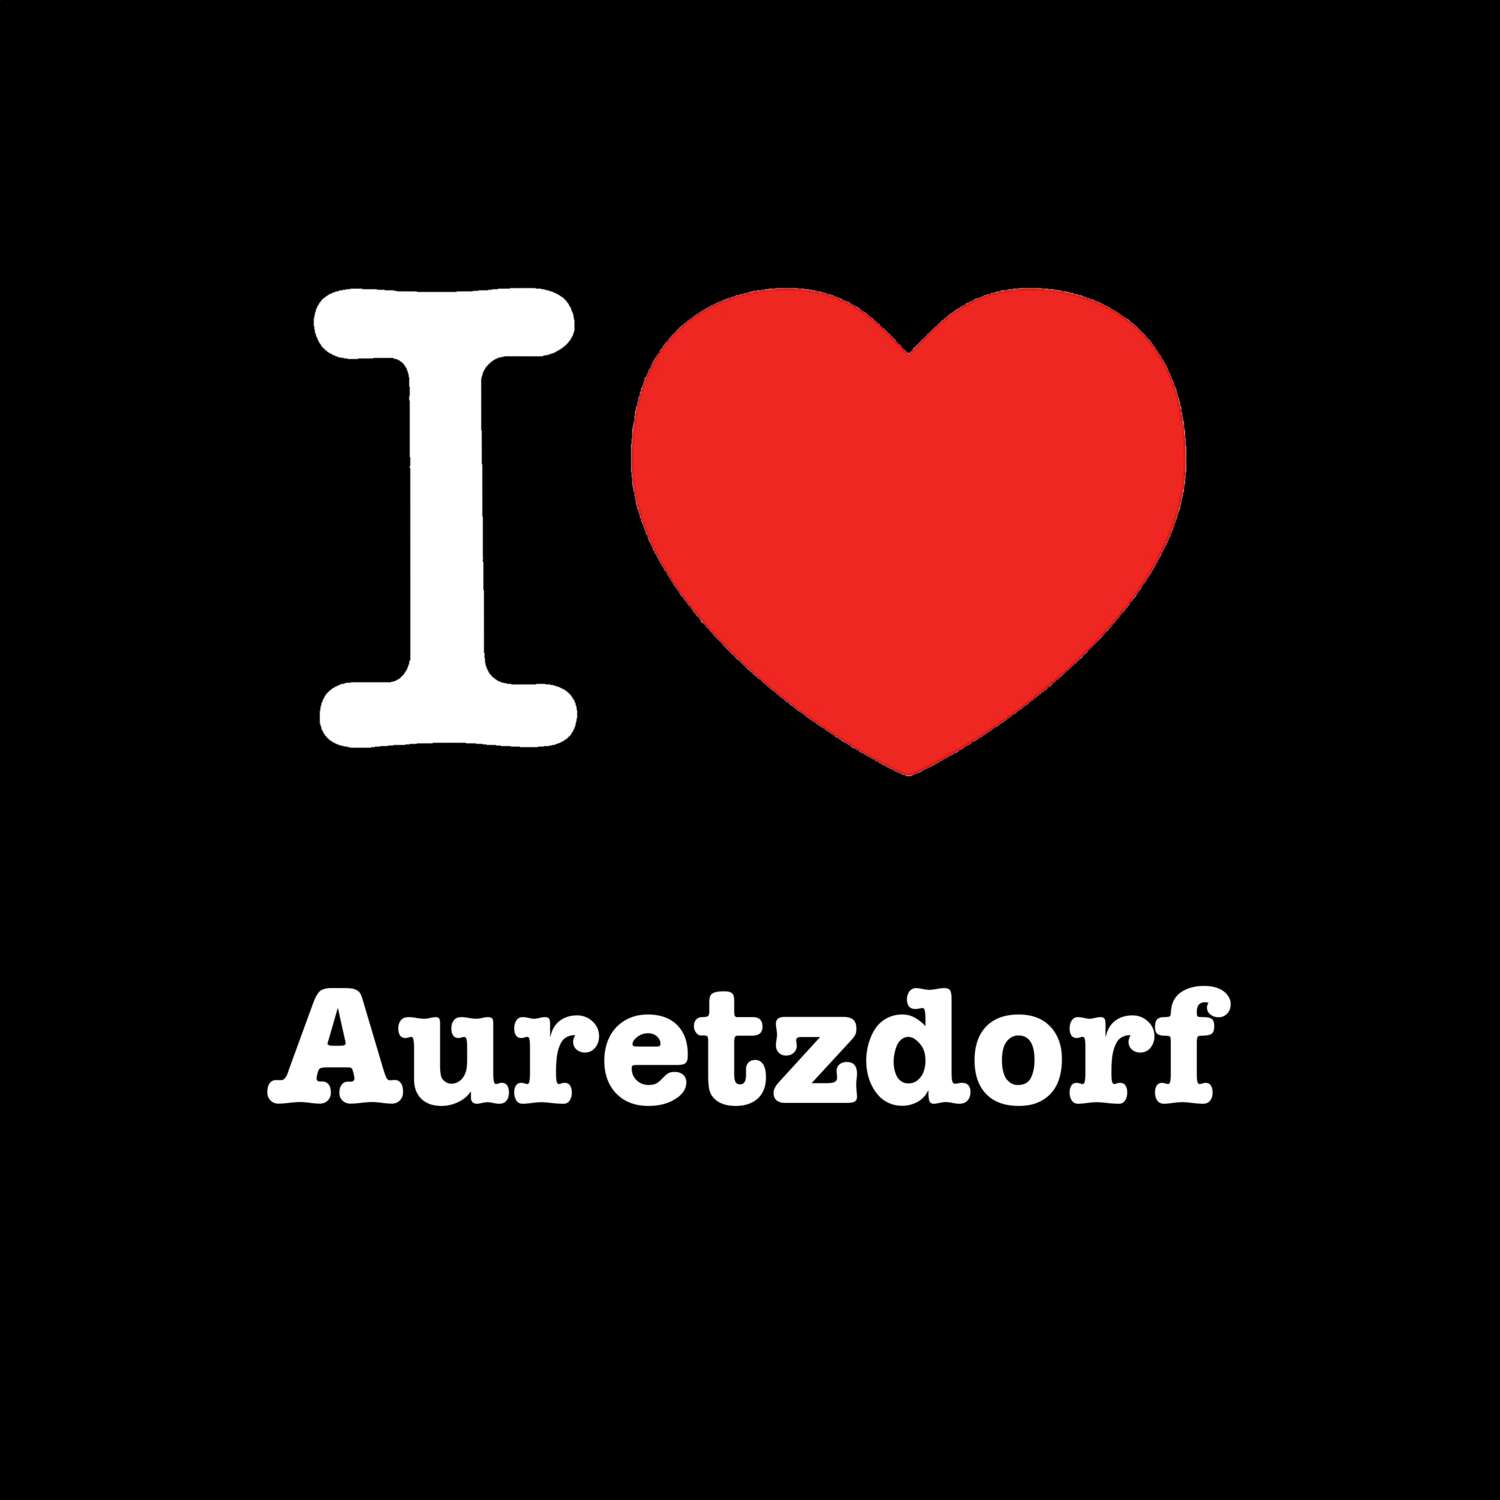 Auretzdorf T-Shirt »I love«